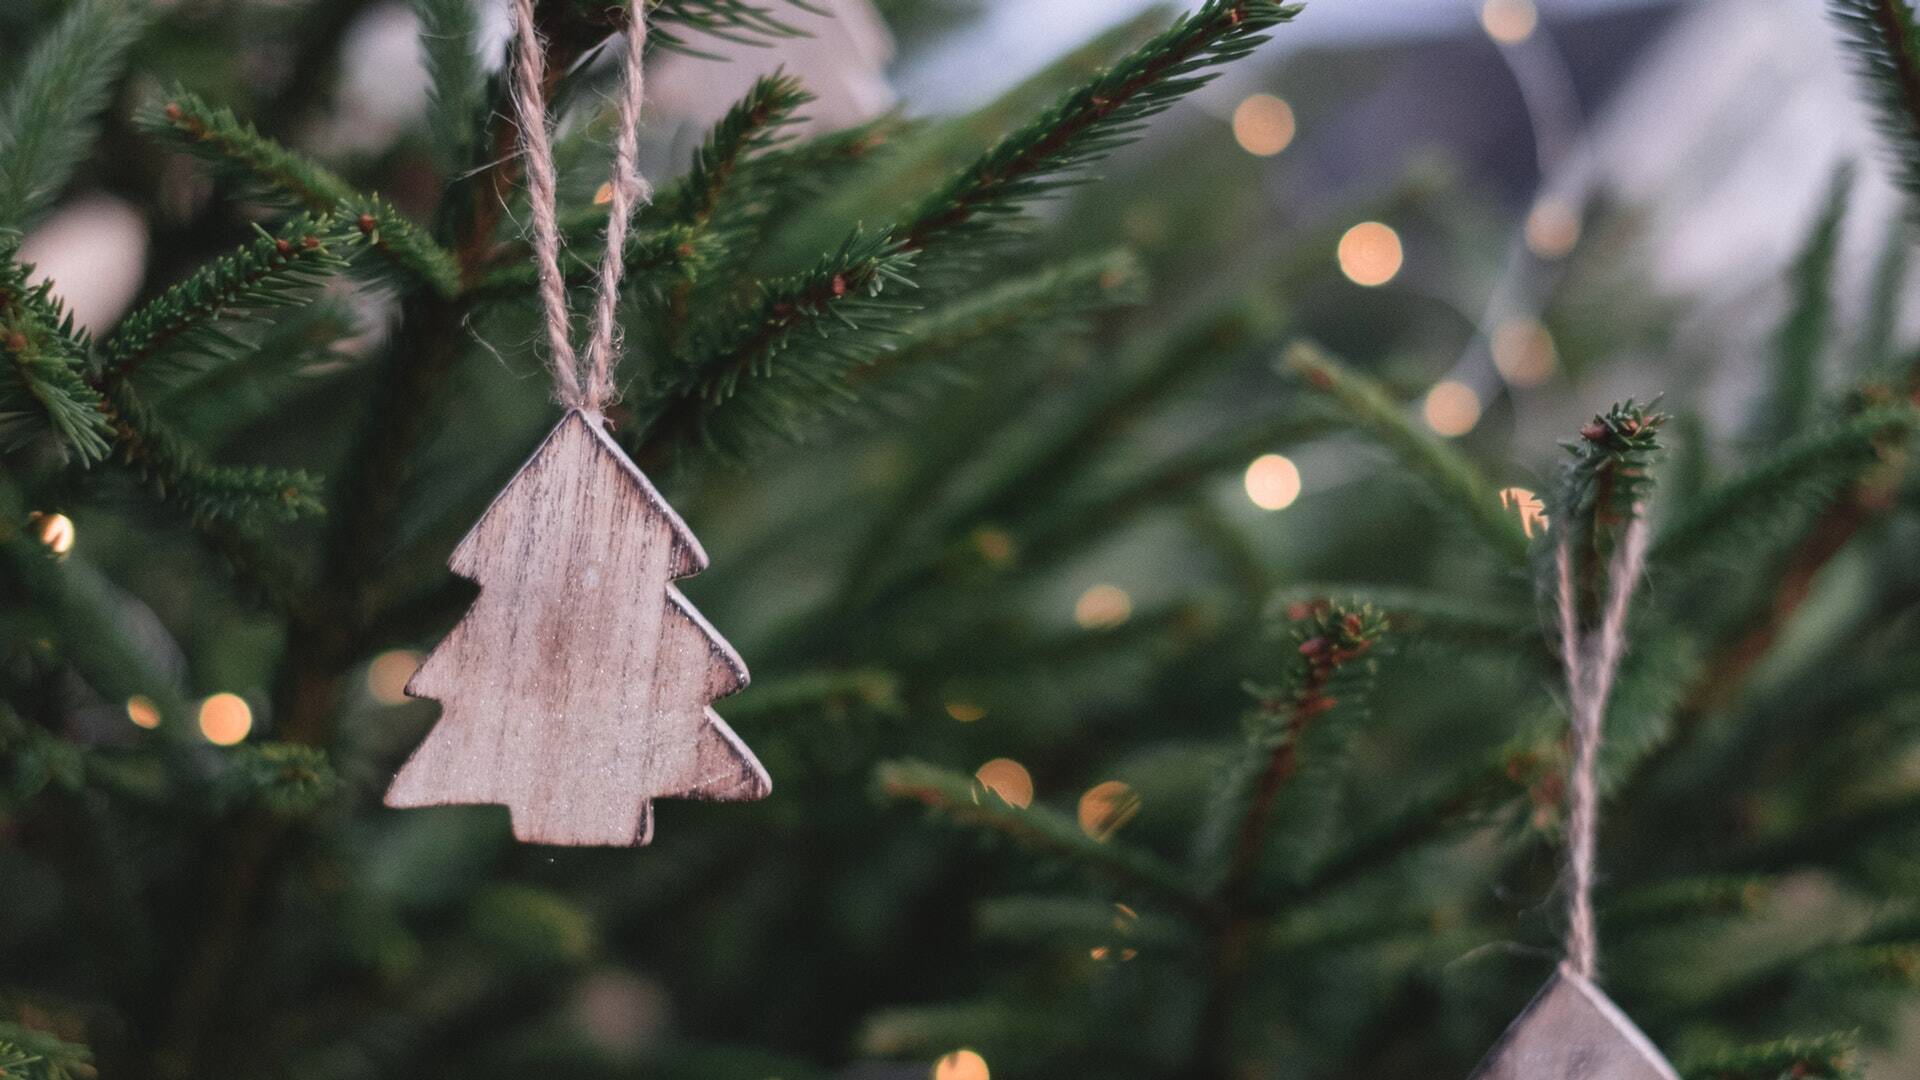 Árbol de Navidad 2019: tendencias e inspiración decorativa